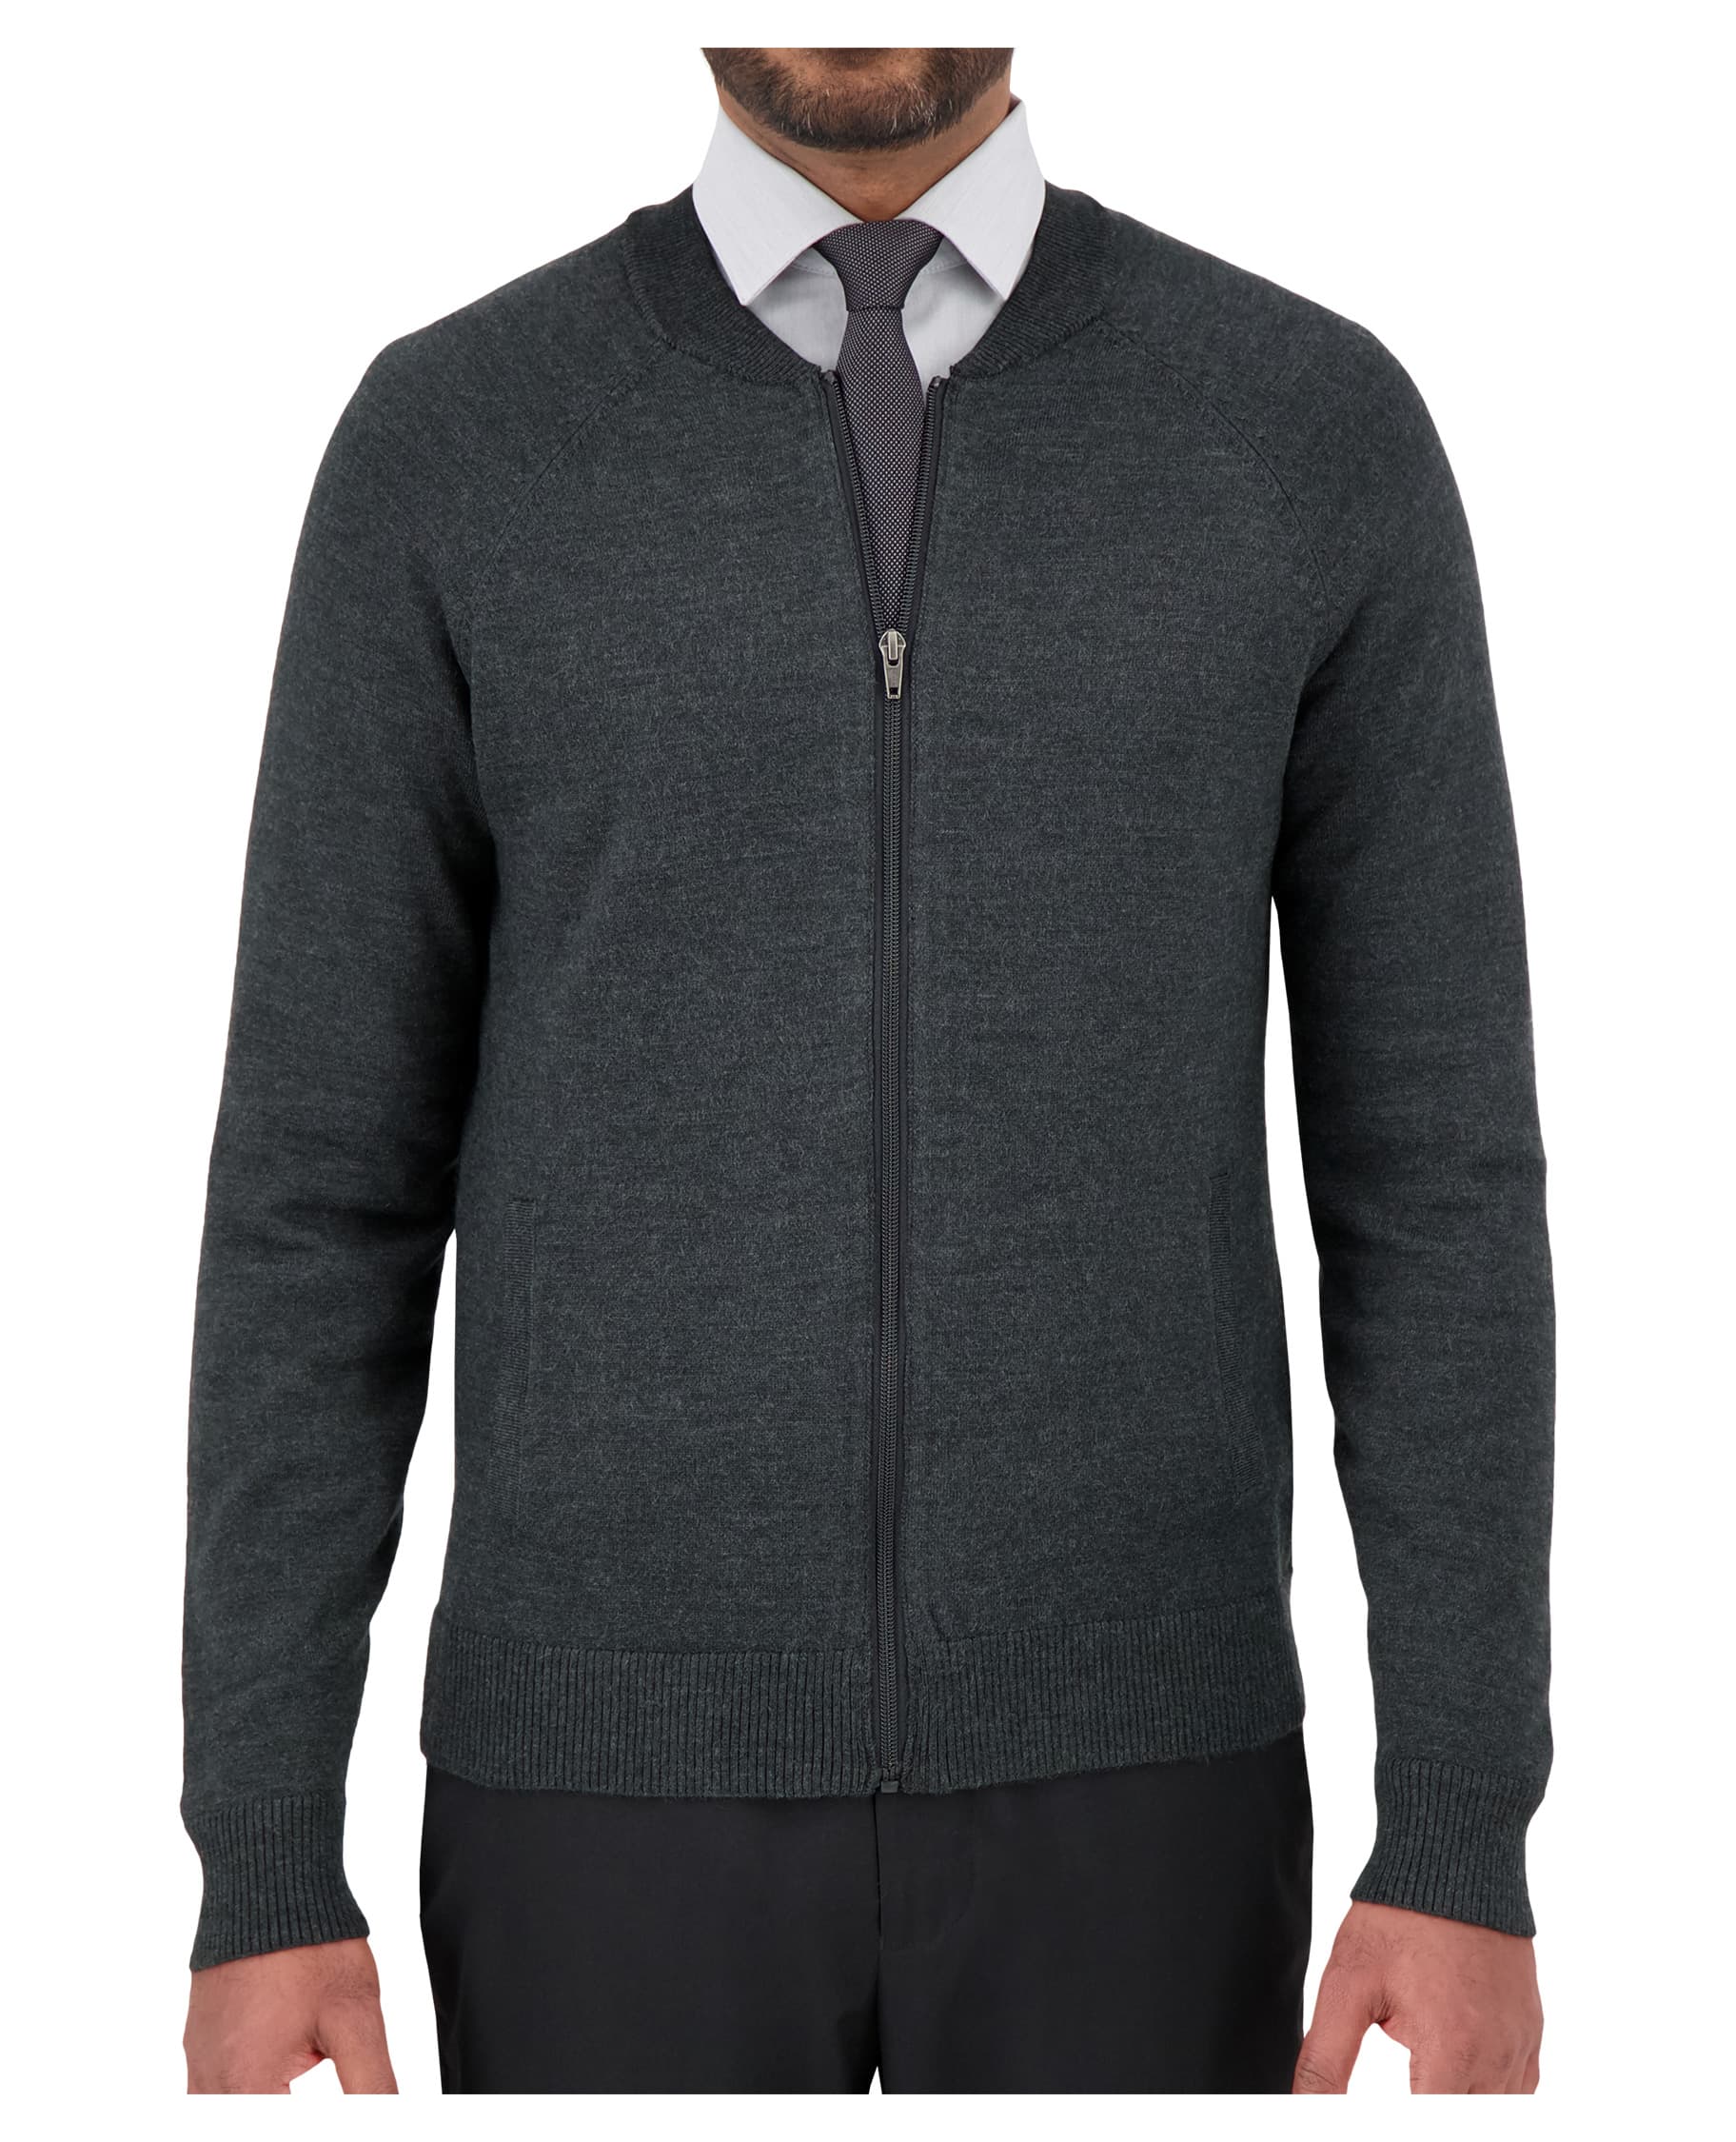 grey full zip uniform sweater